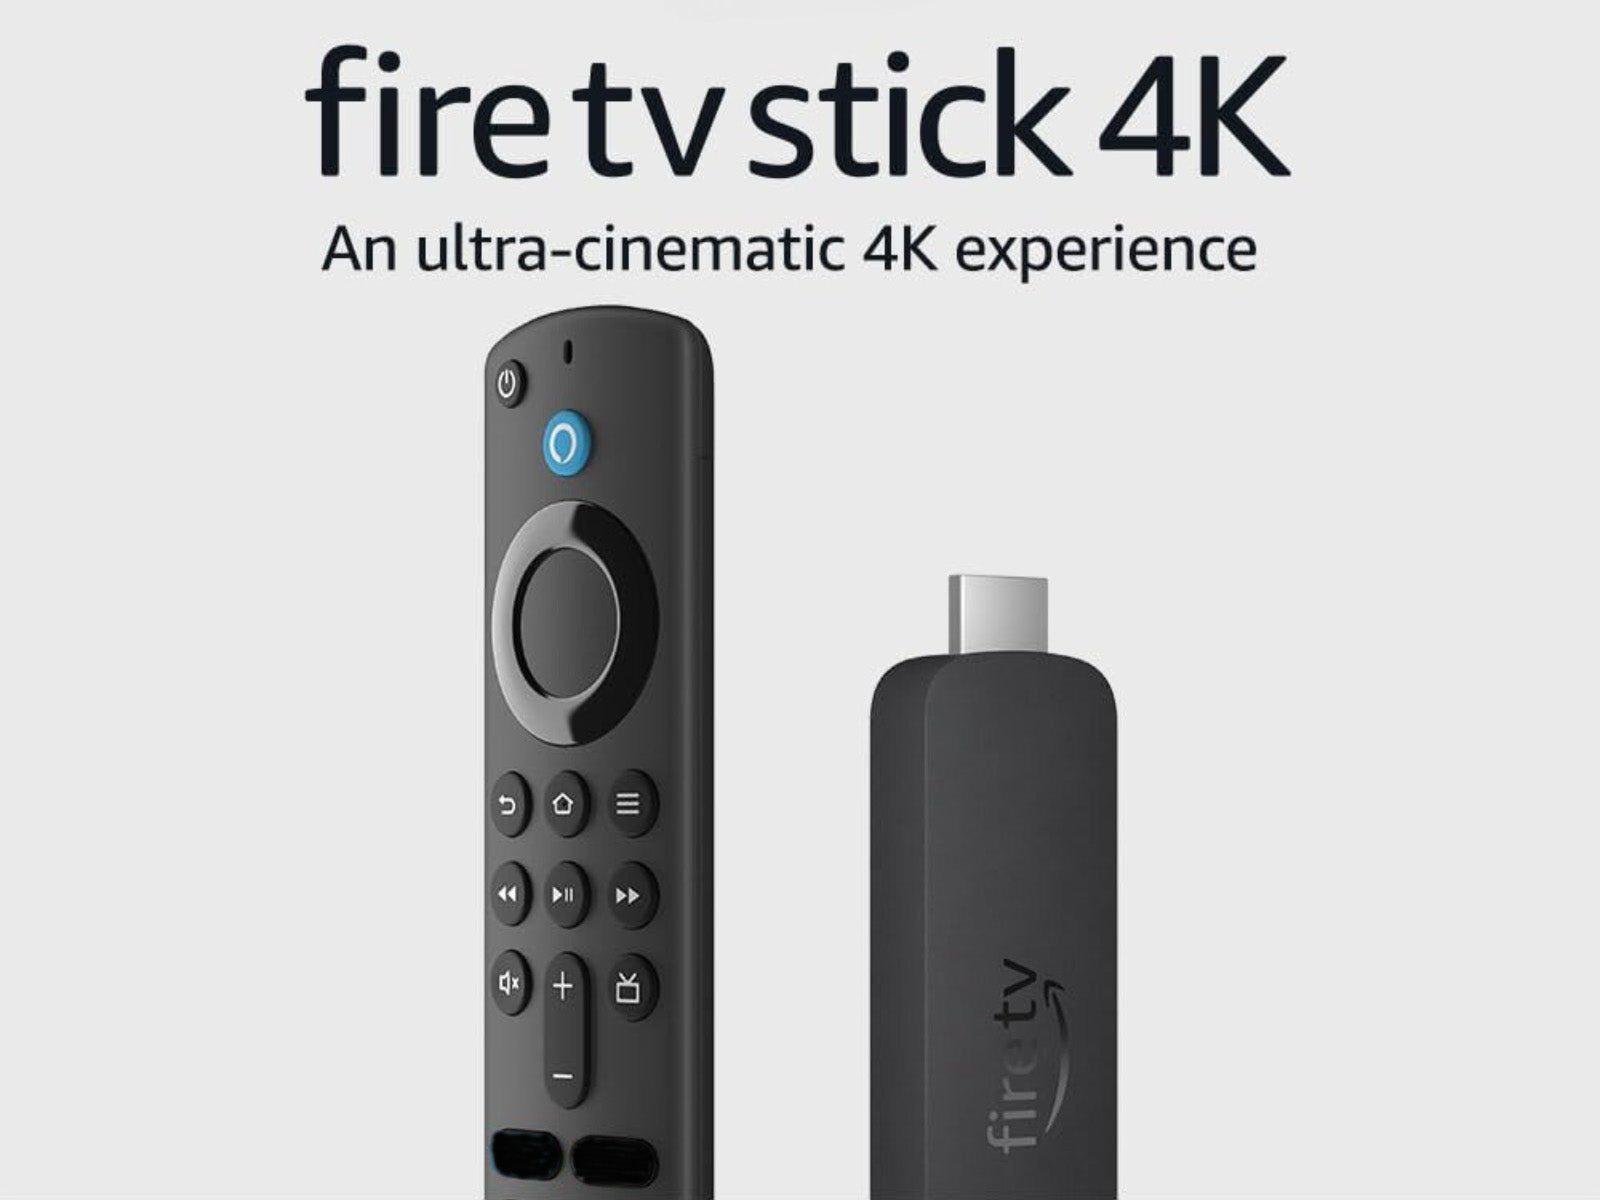  Amazon Fire TV Stick 4K Remote and Fire Stick